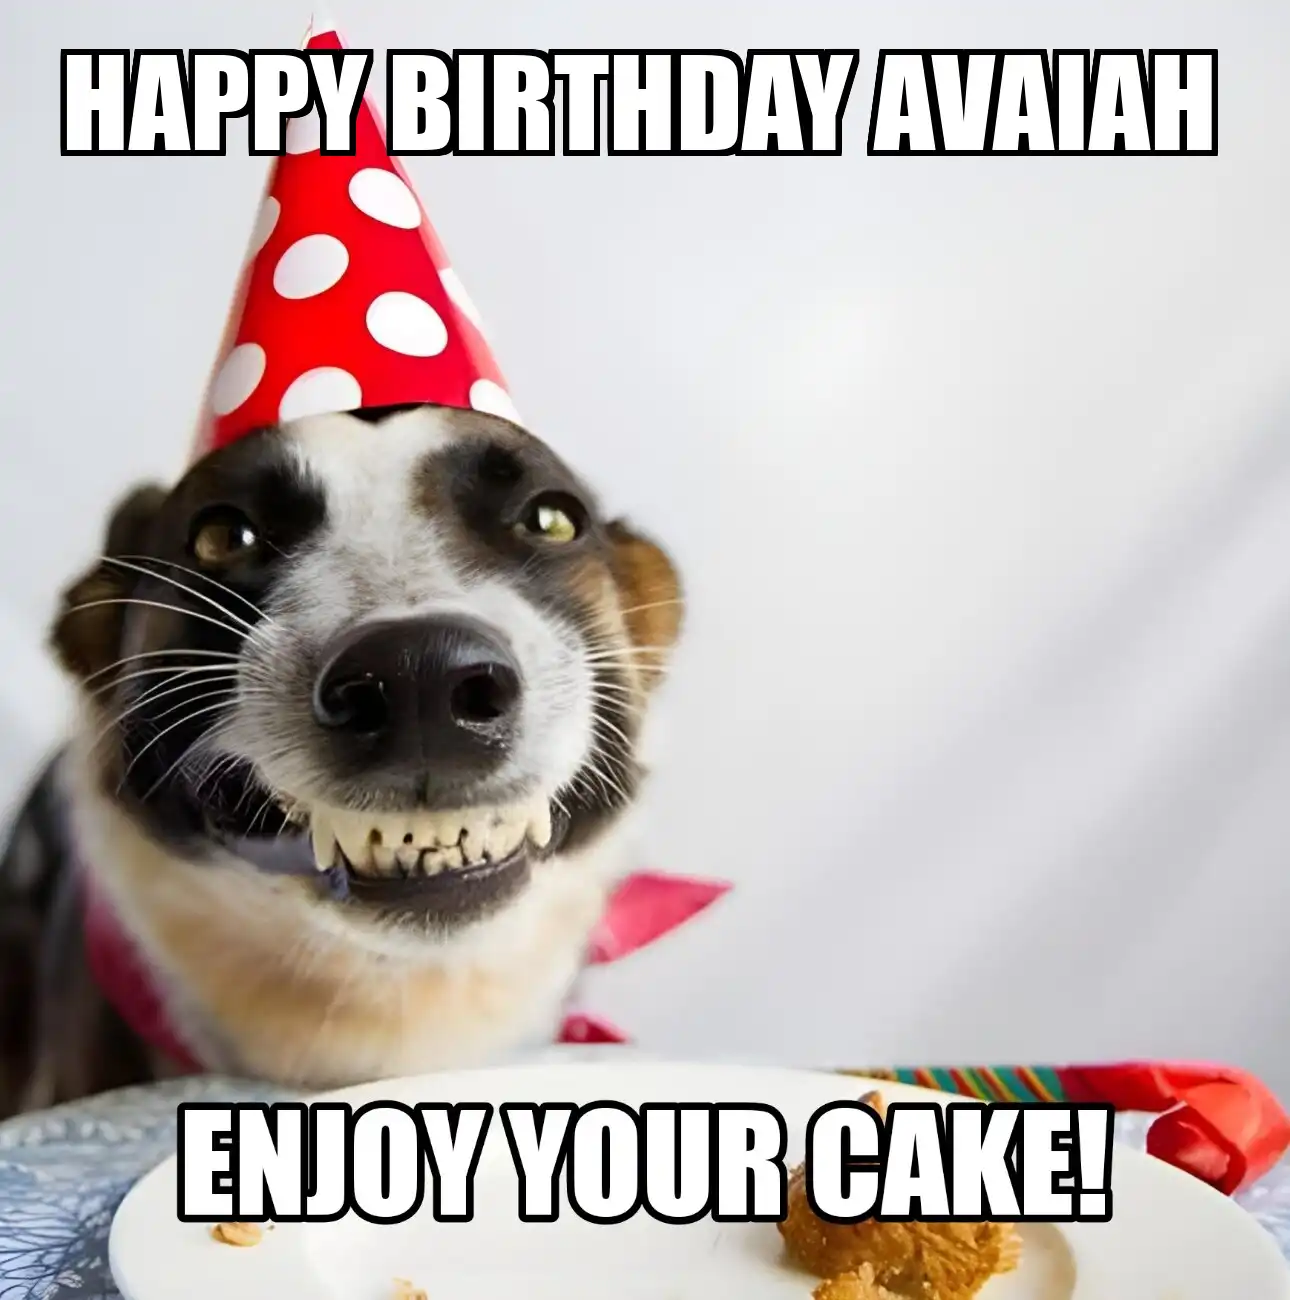 Happy Birthday Avaiah Enjoy Your Cake Dog Meme